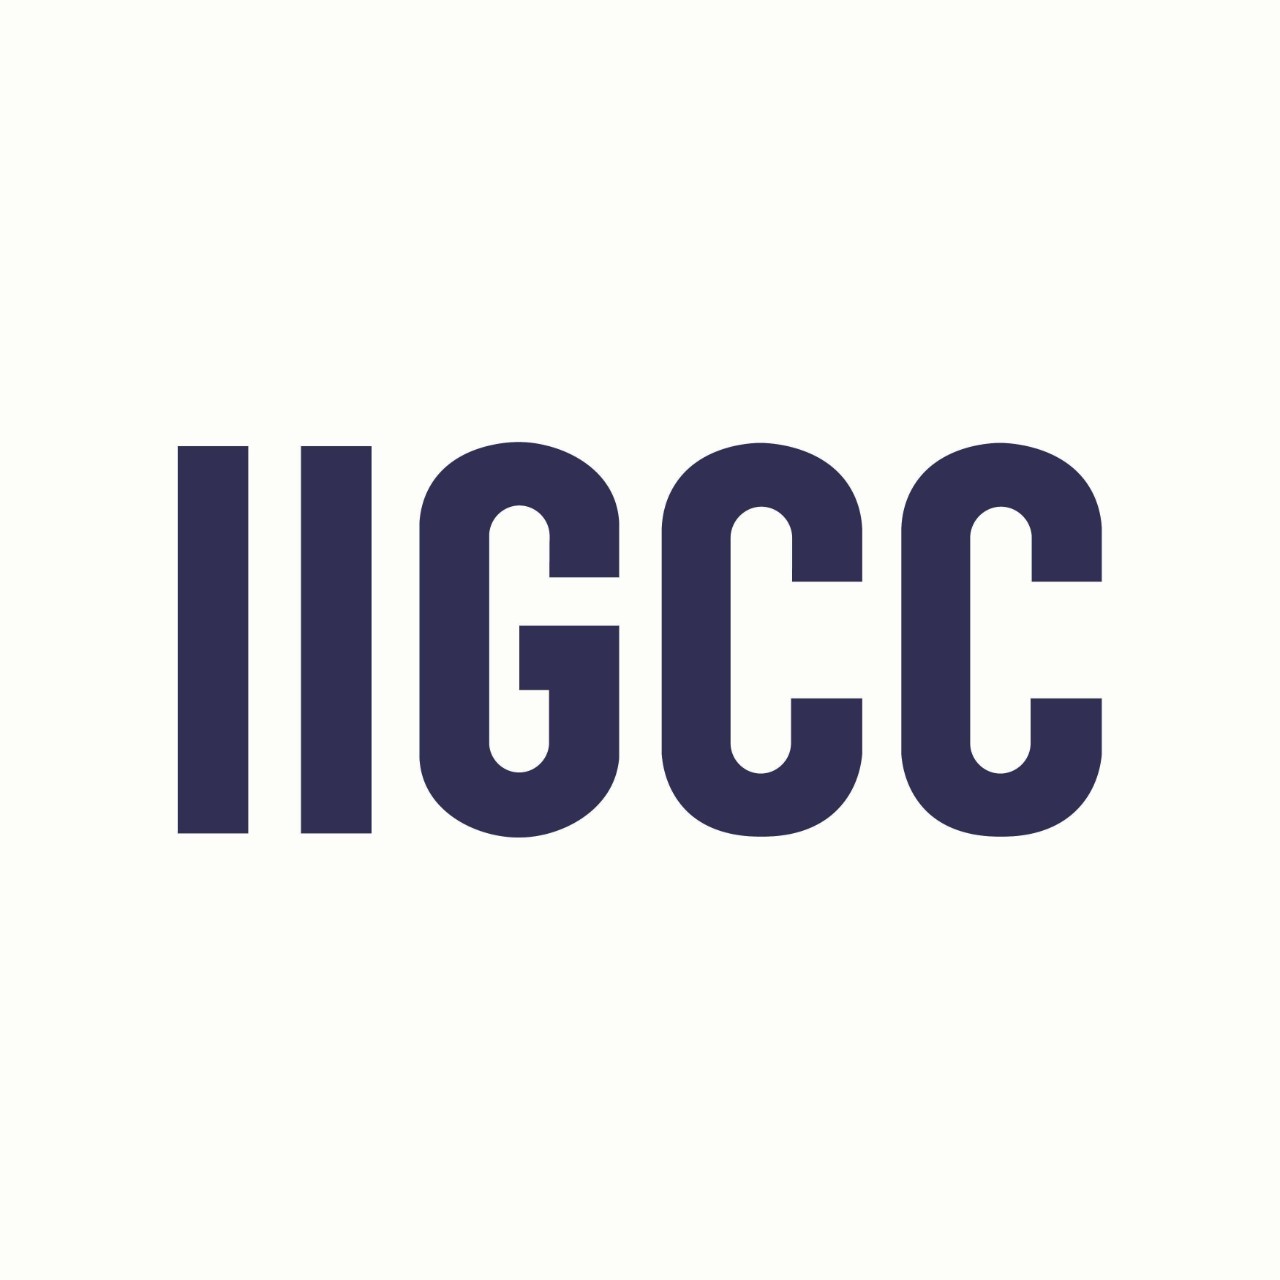  IIGCC website - New window